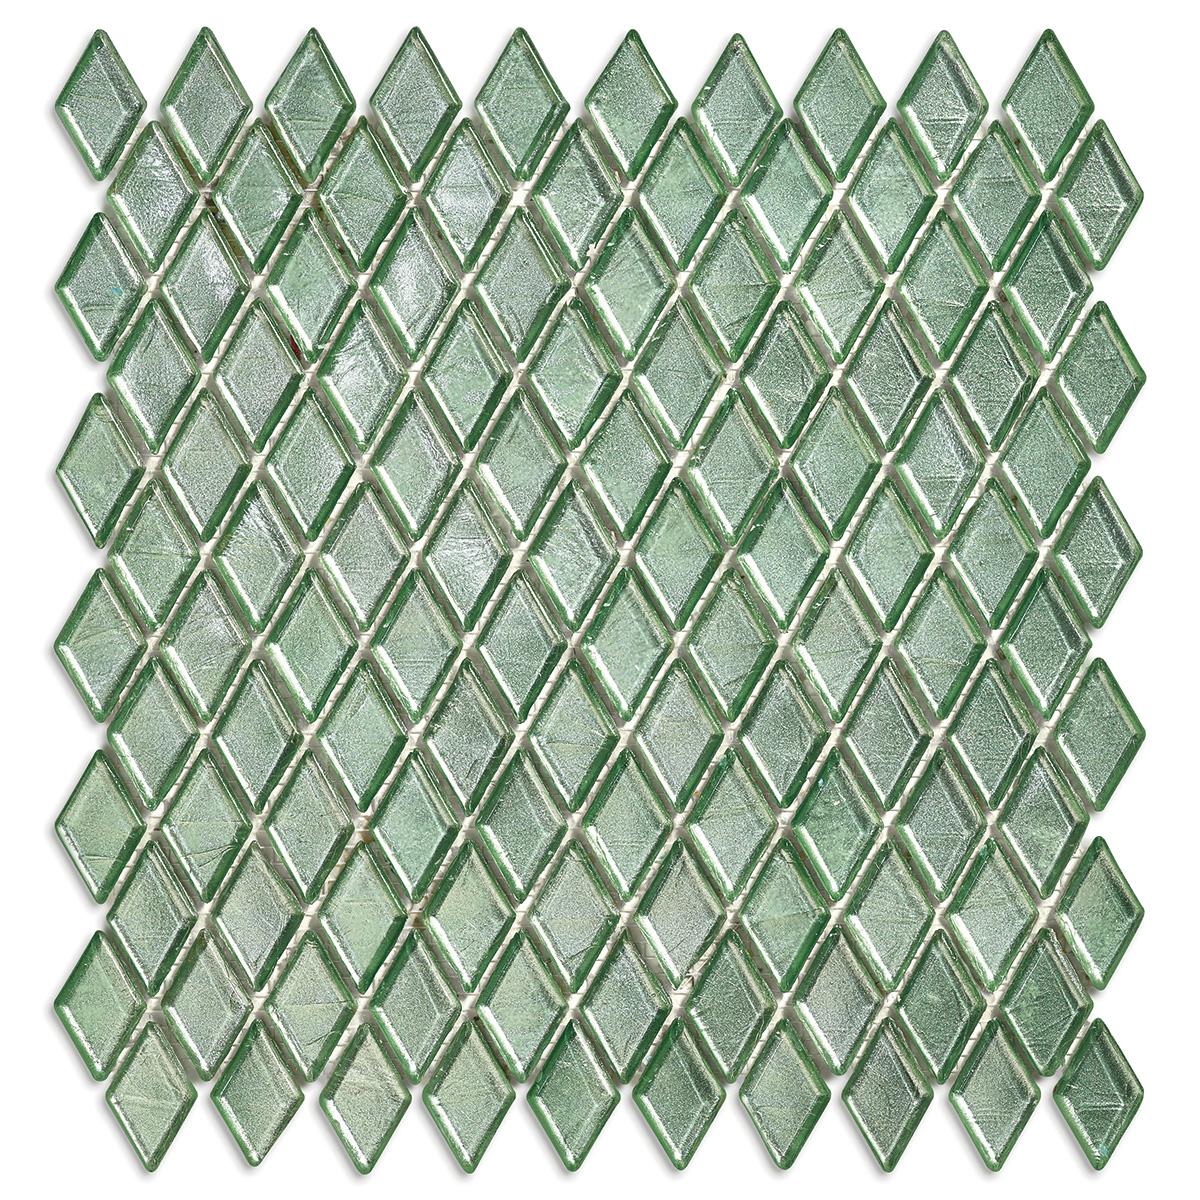 Sicis Mazaru Diamond Glass Mosaic